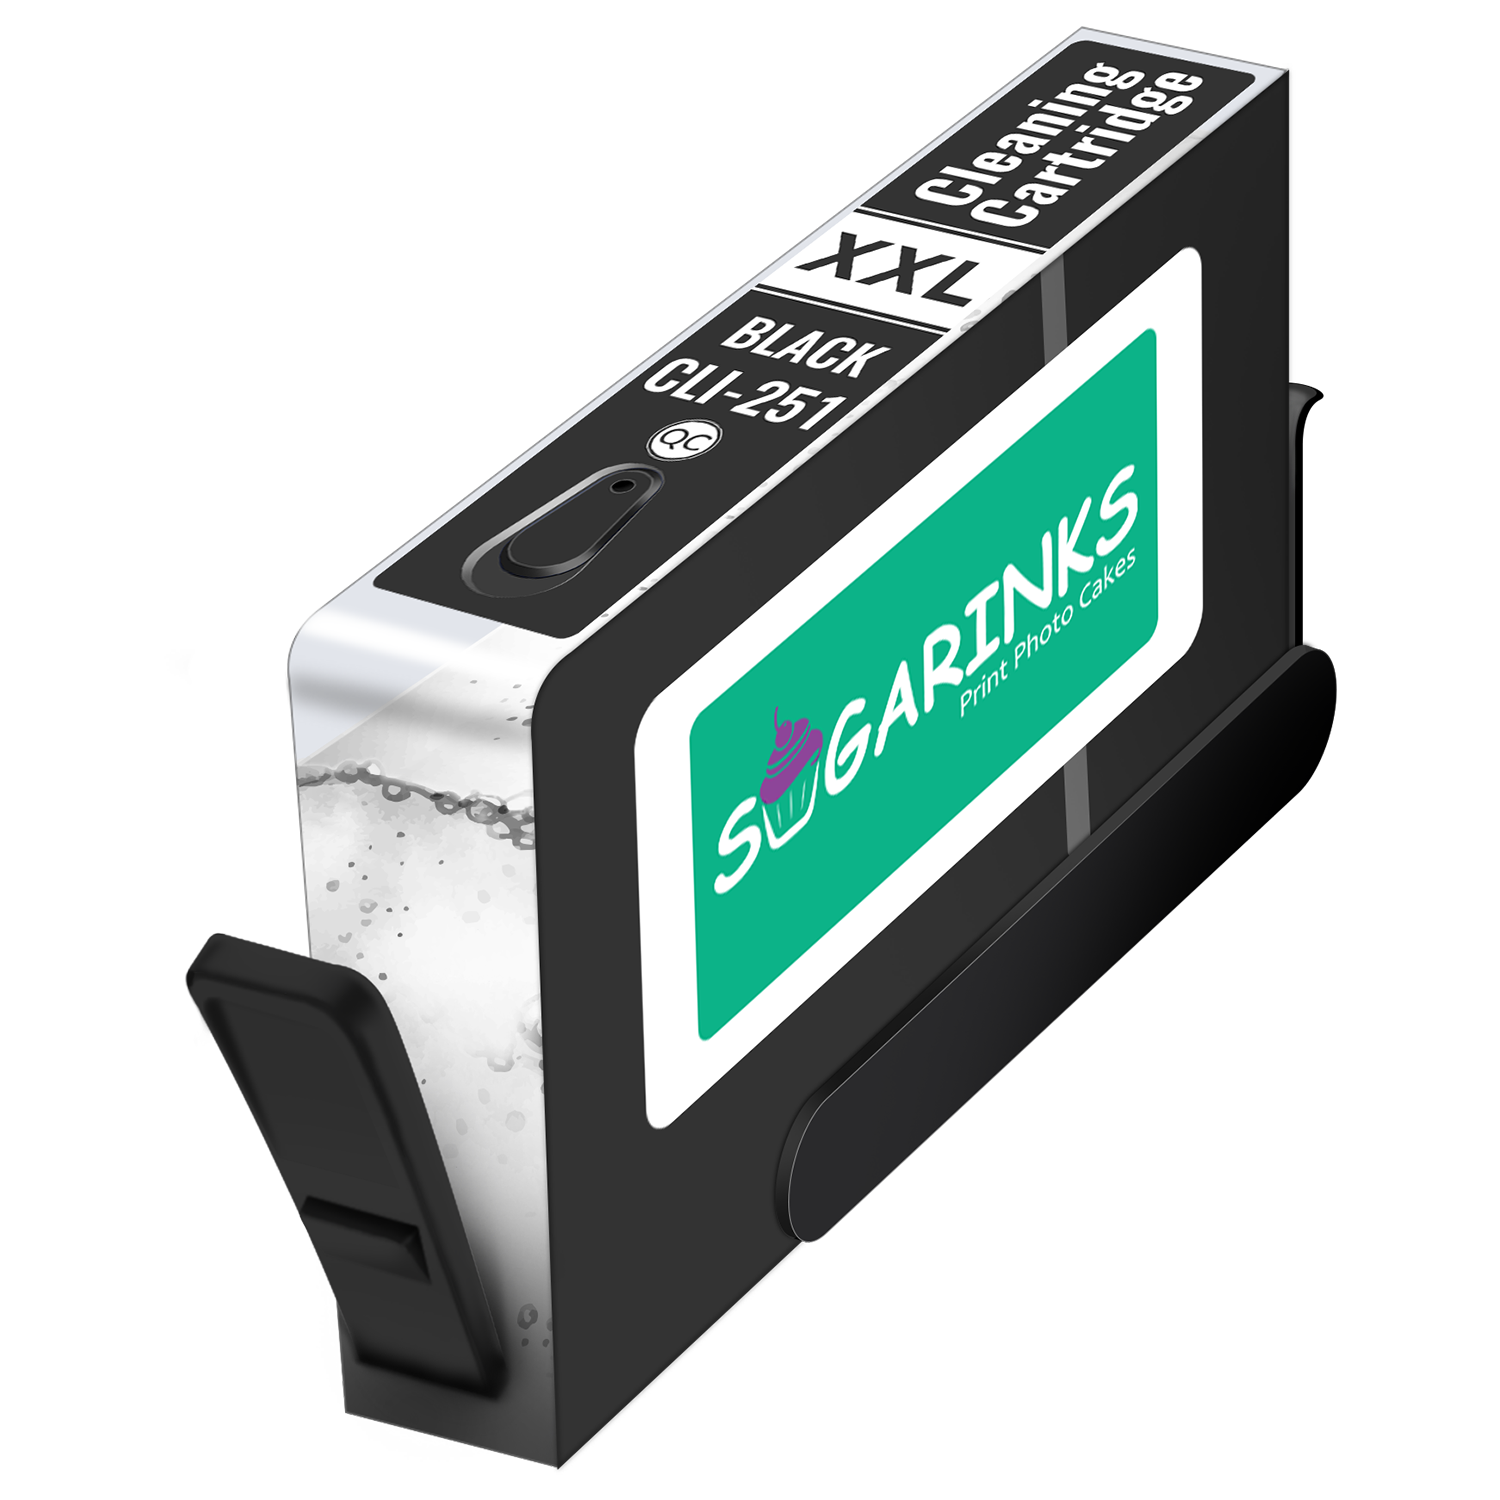 Sugarinks Edible Cleaning Cartridge CLI-251XL for Canon Edible Printer – Black